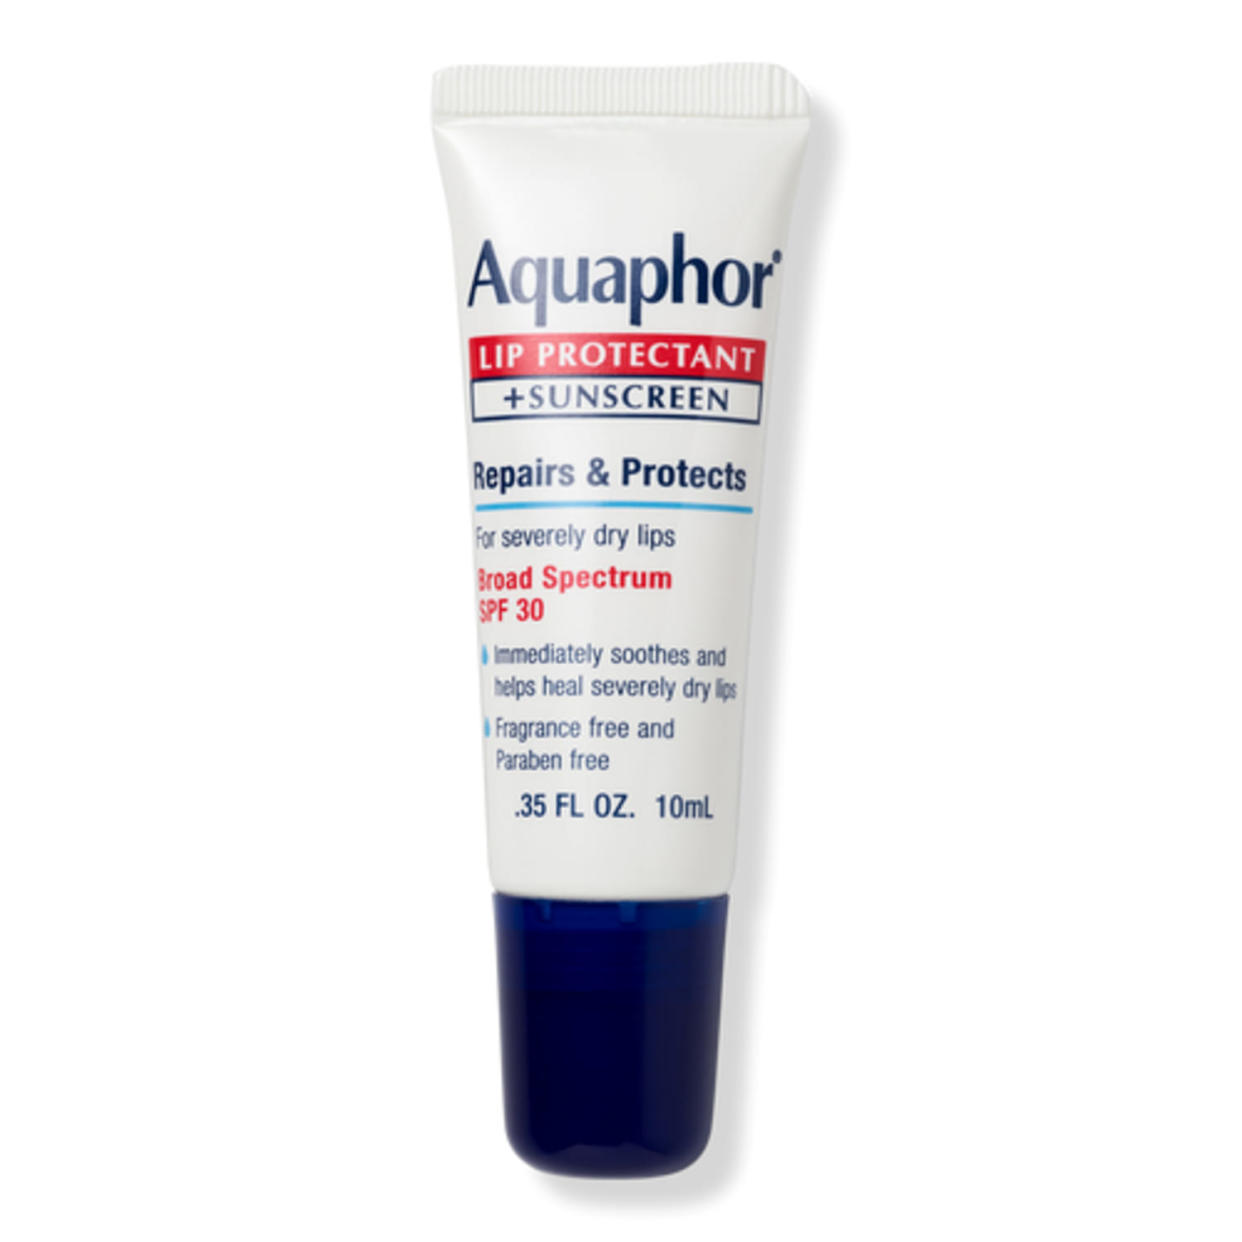 Aquaphor Lip Protectant and Sunscreen (Amazon / Amazon)